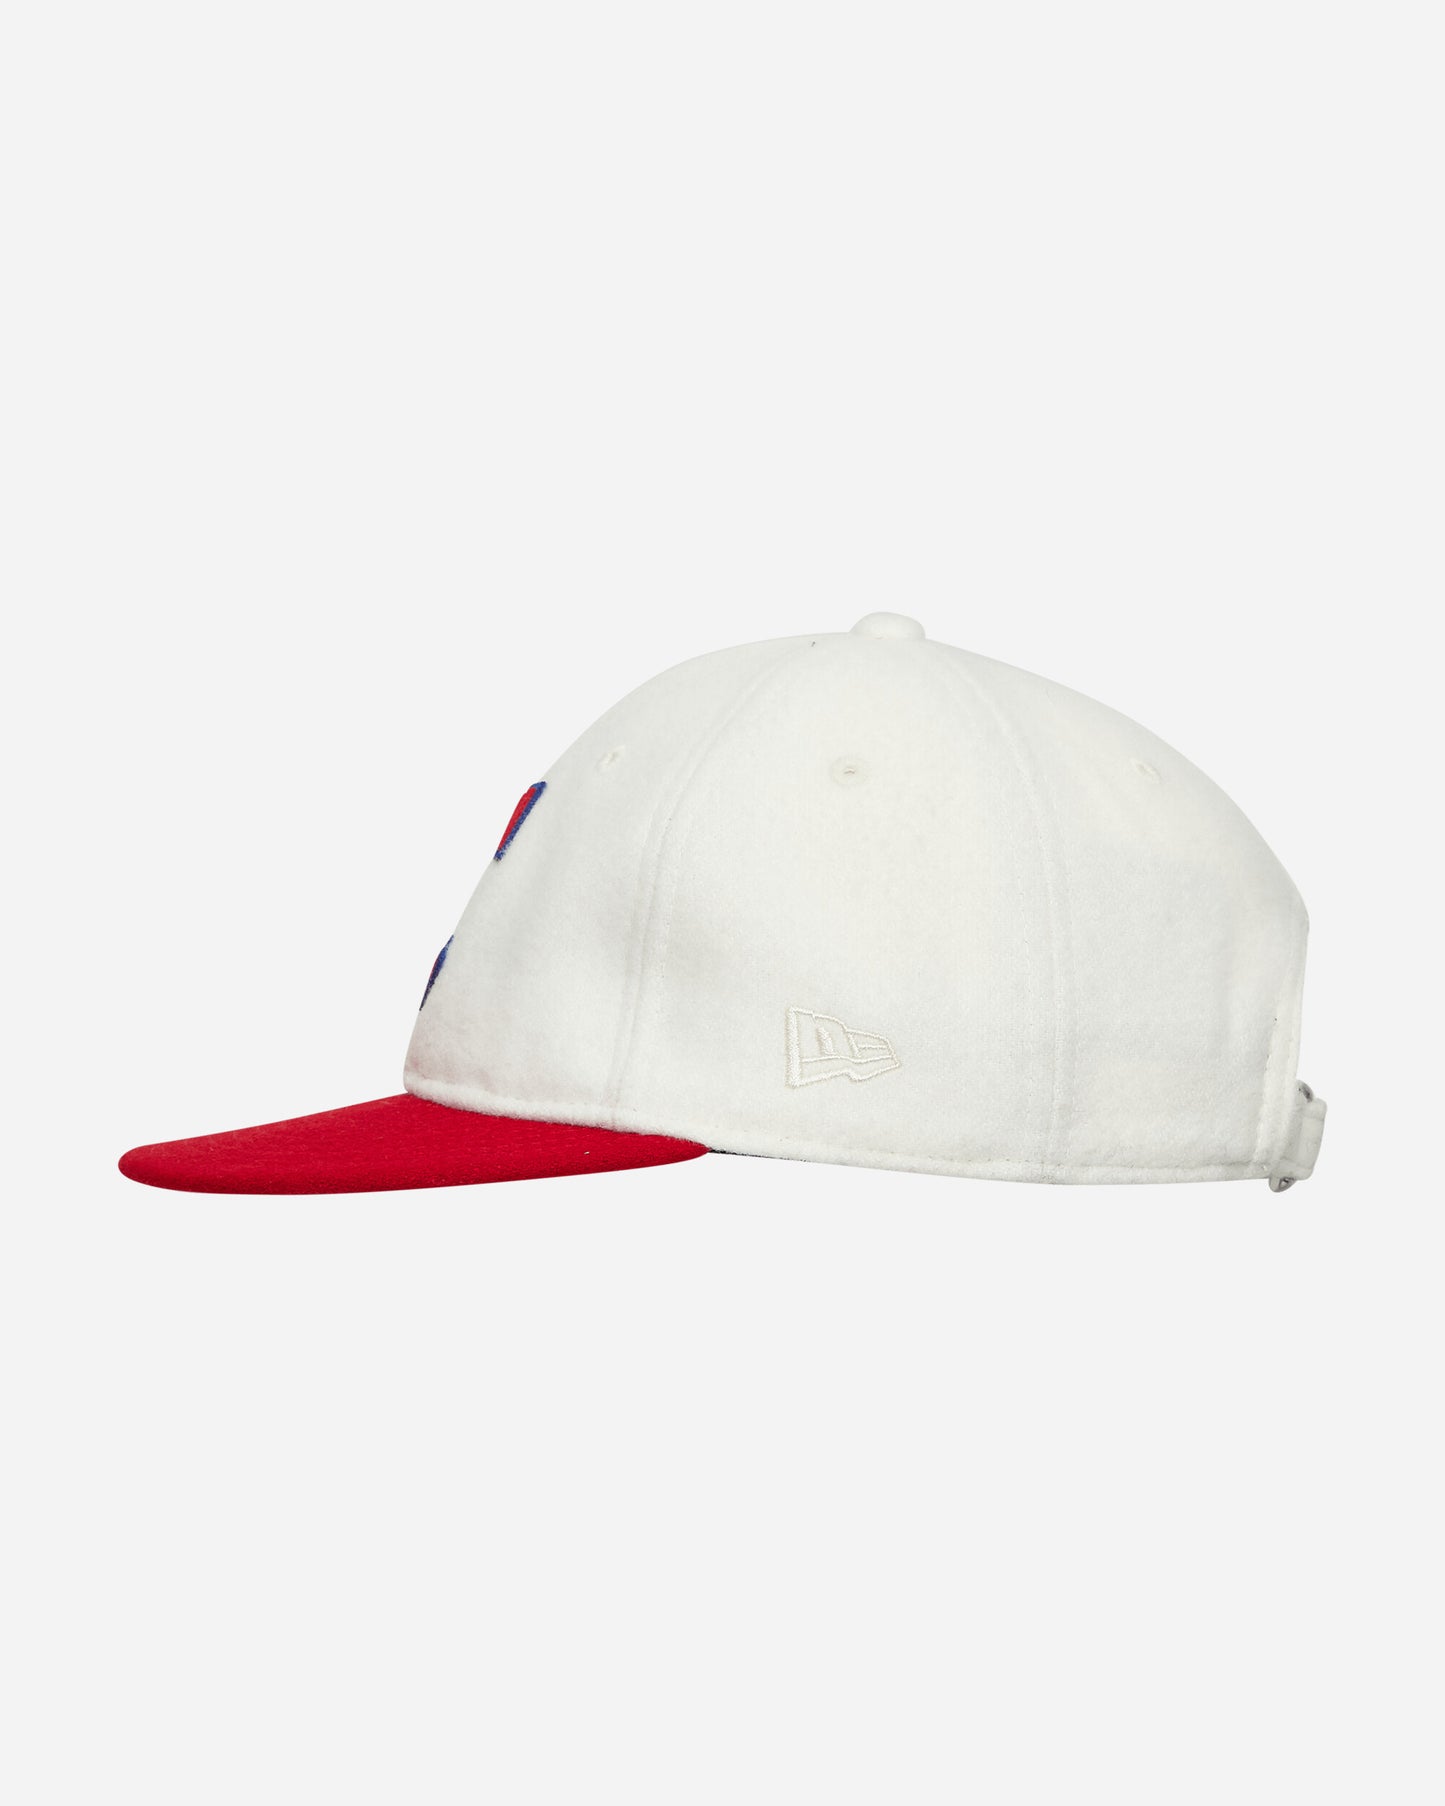 New Era Cincinnati Reds Otc Hats Caps 60435229 OTC